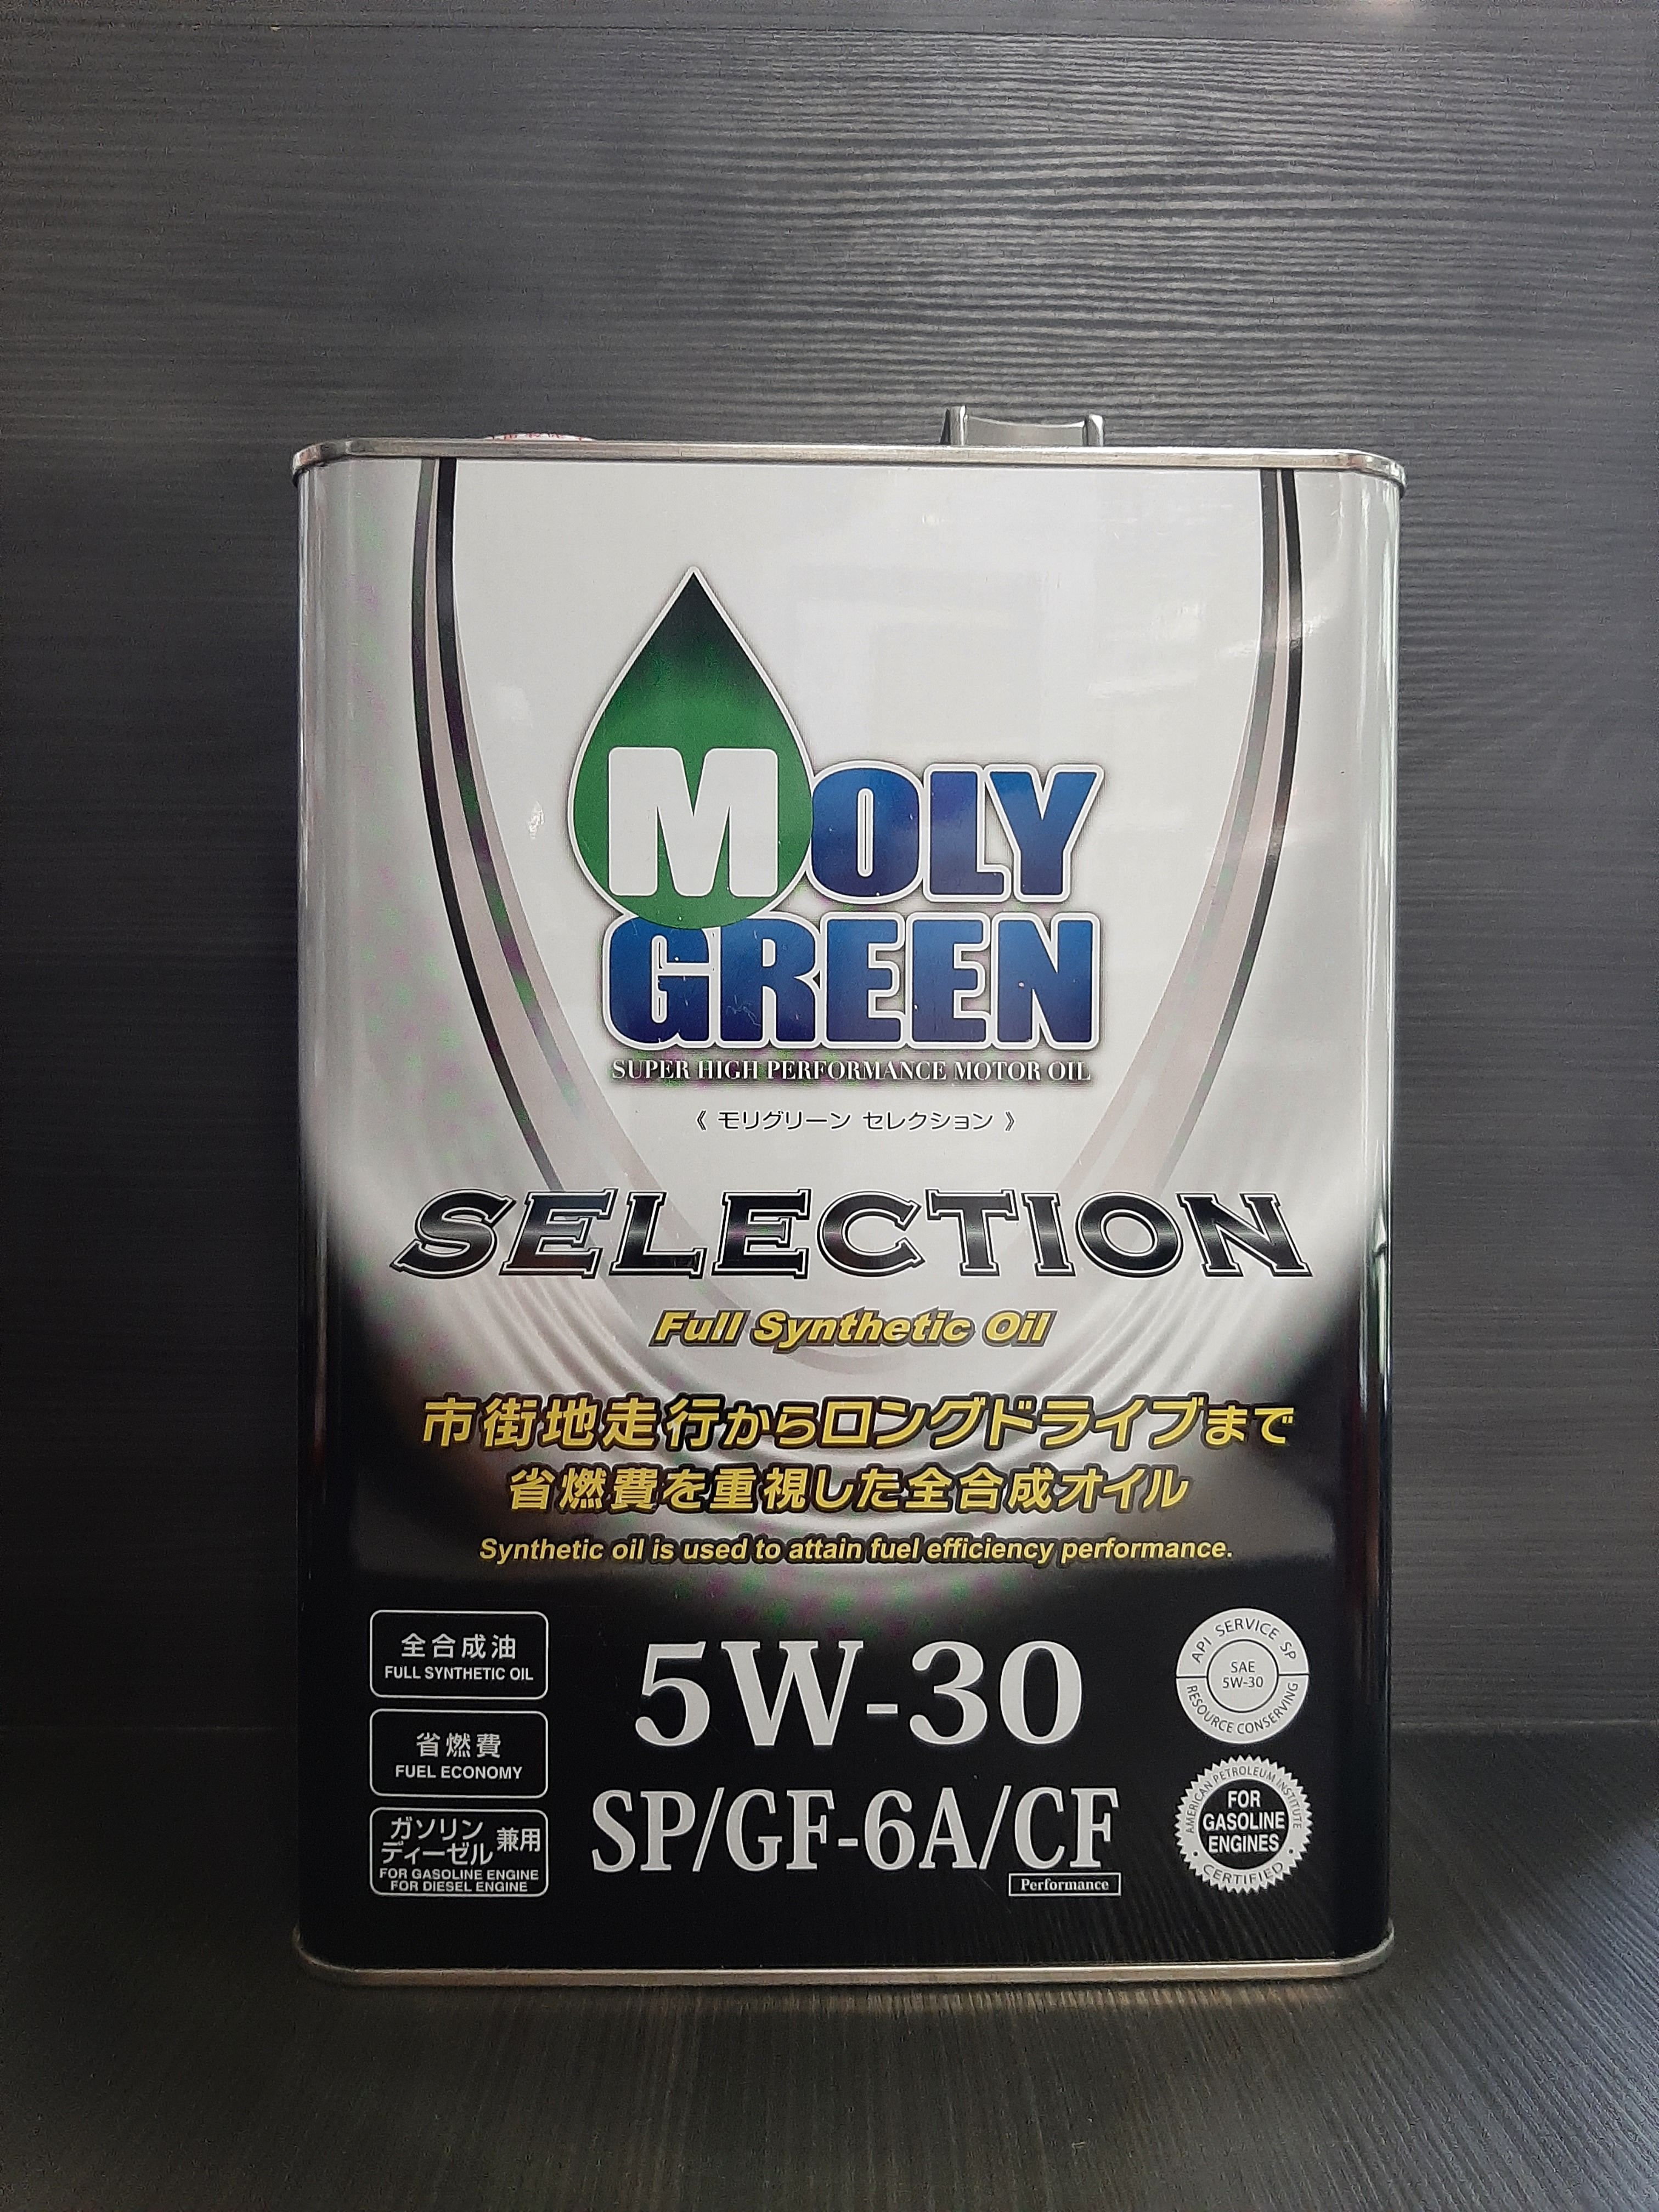 Моли грин 5w30 купить. Моторное масло Moly Green 5w30. Масло Молли Грин 5w30. Моли Грин 5w30 полусинтетика. Молигрин 5w30 производство.